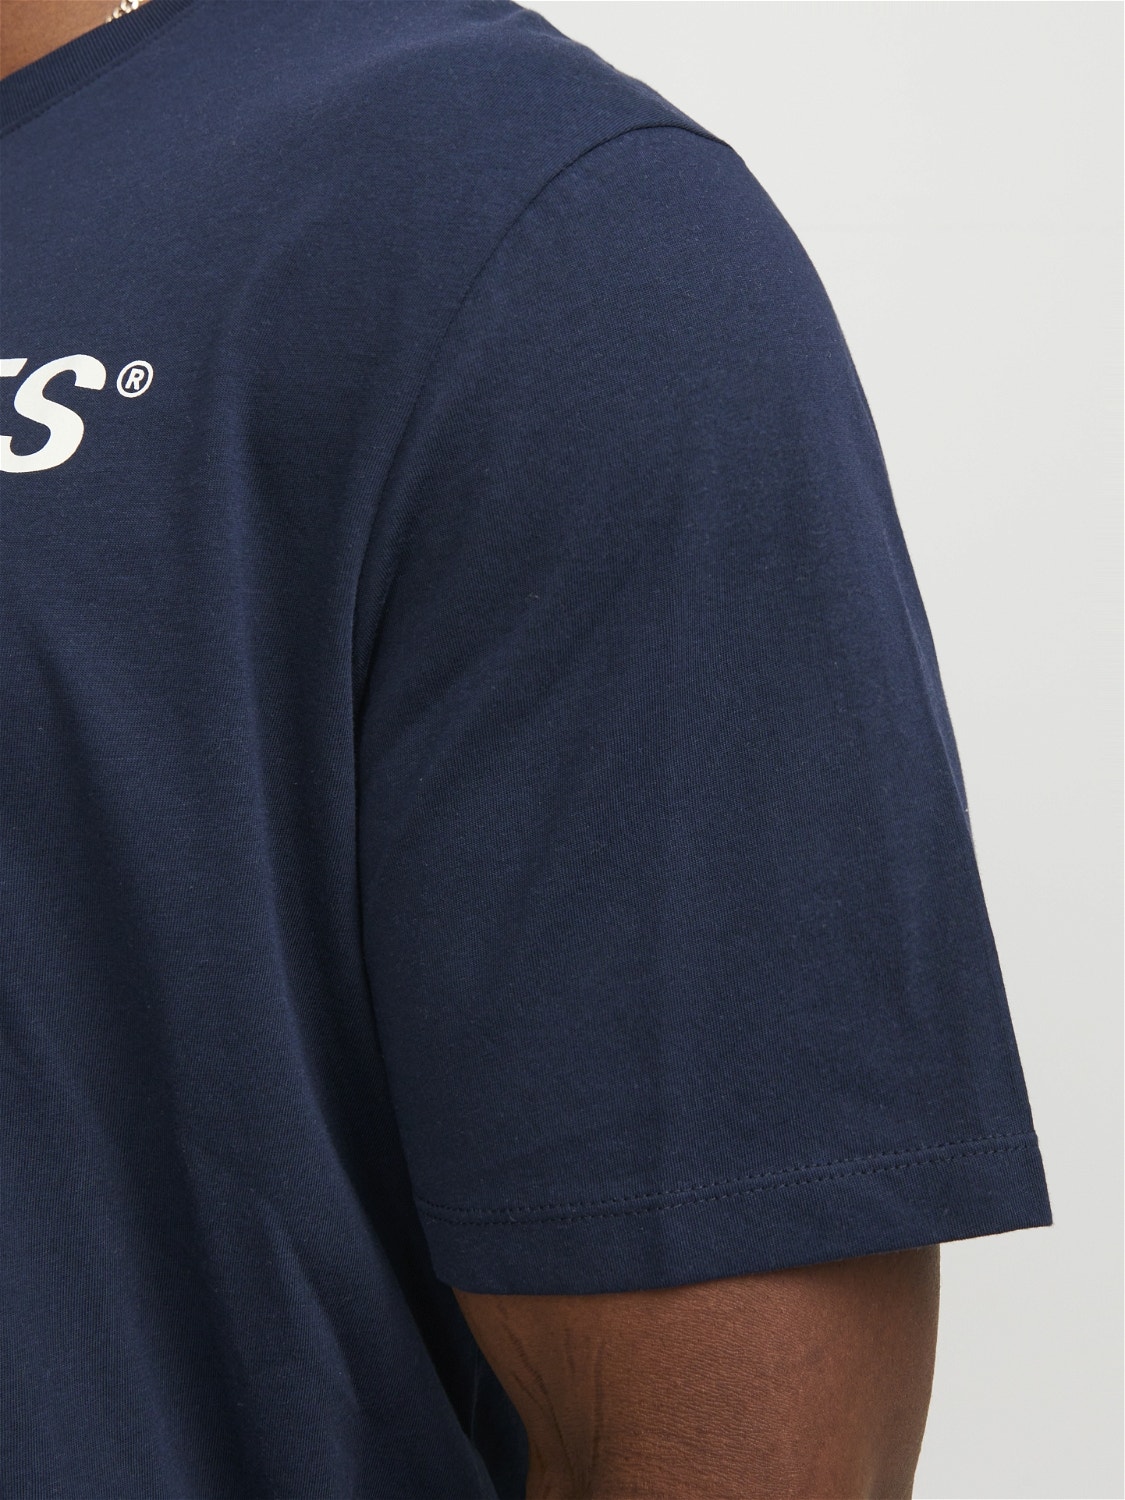 Jack & Jones Plus Size Logo T-shirt -Navy Blazer - 12184987